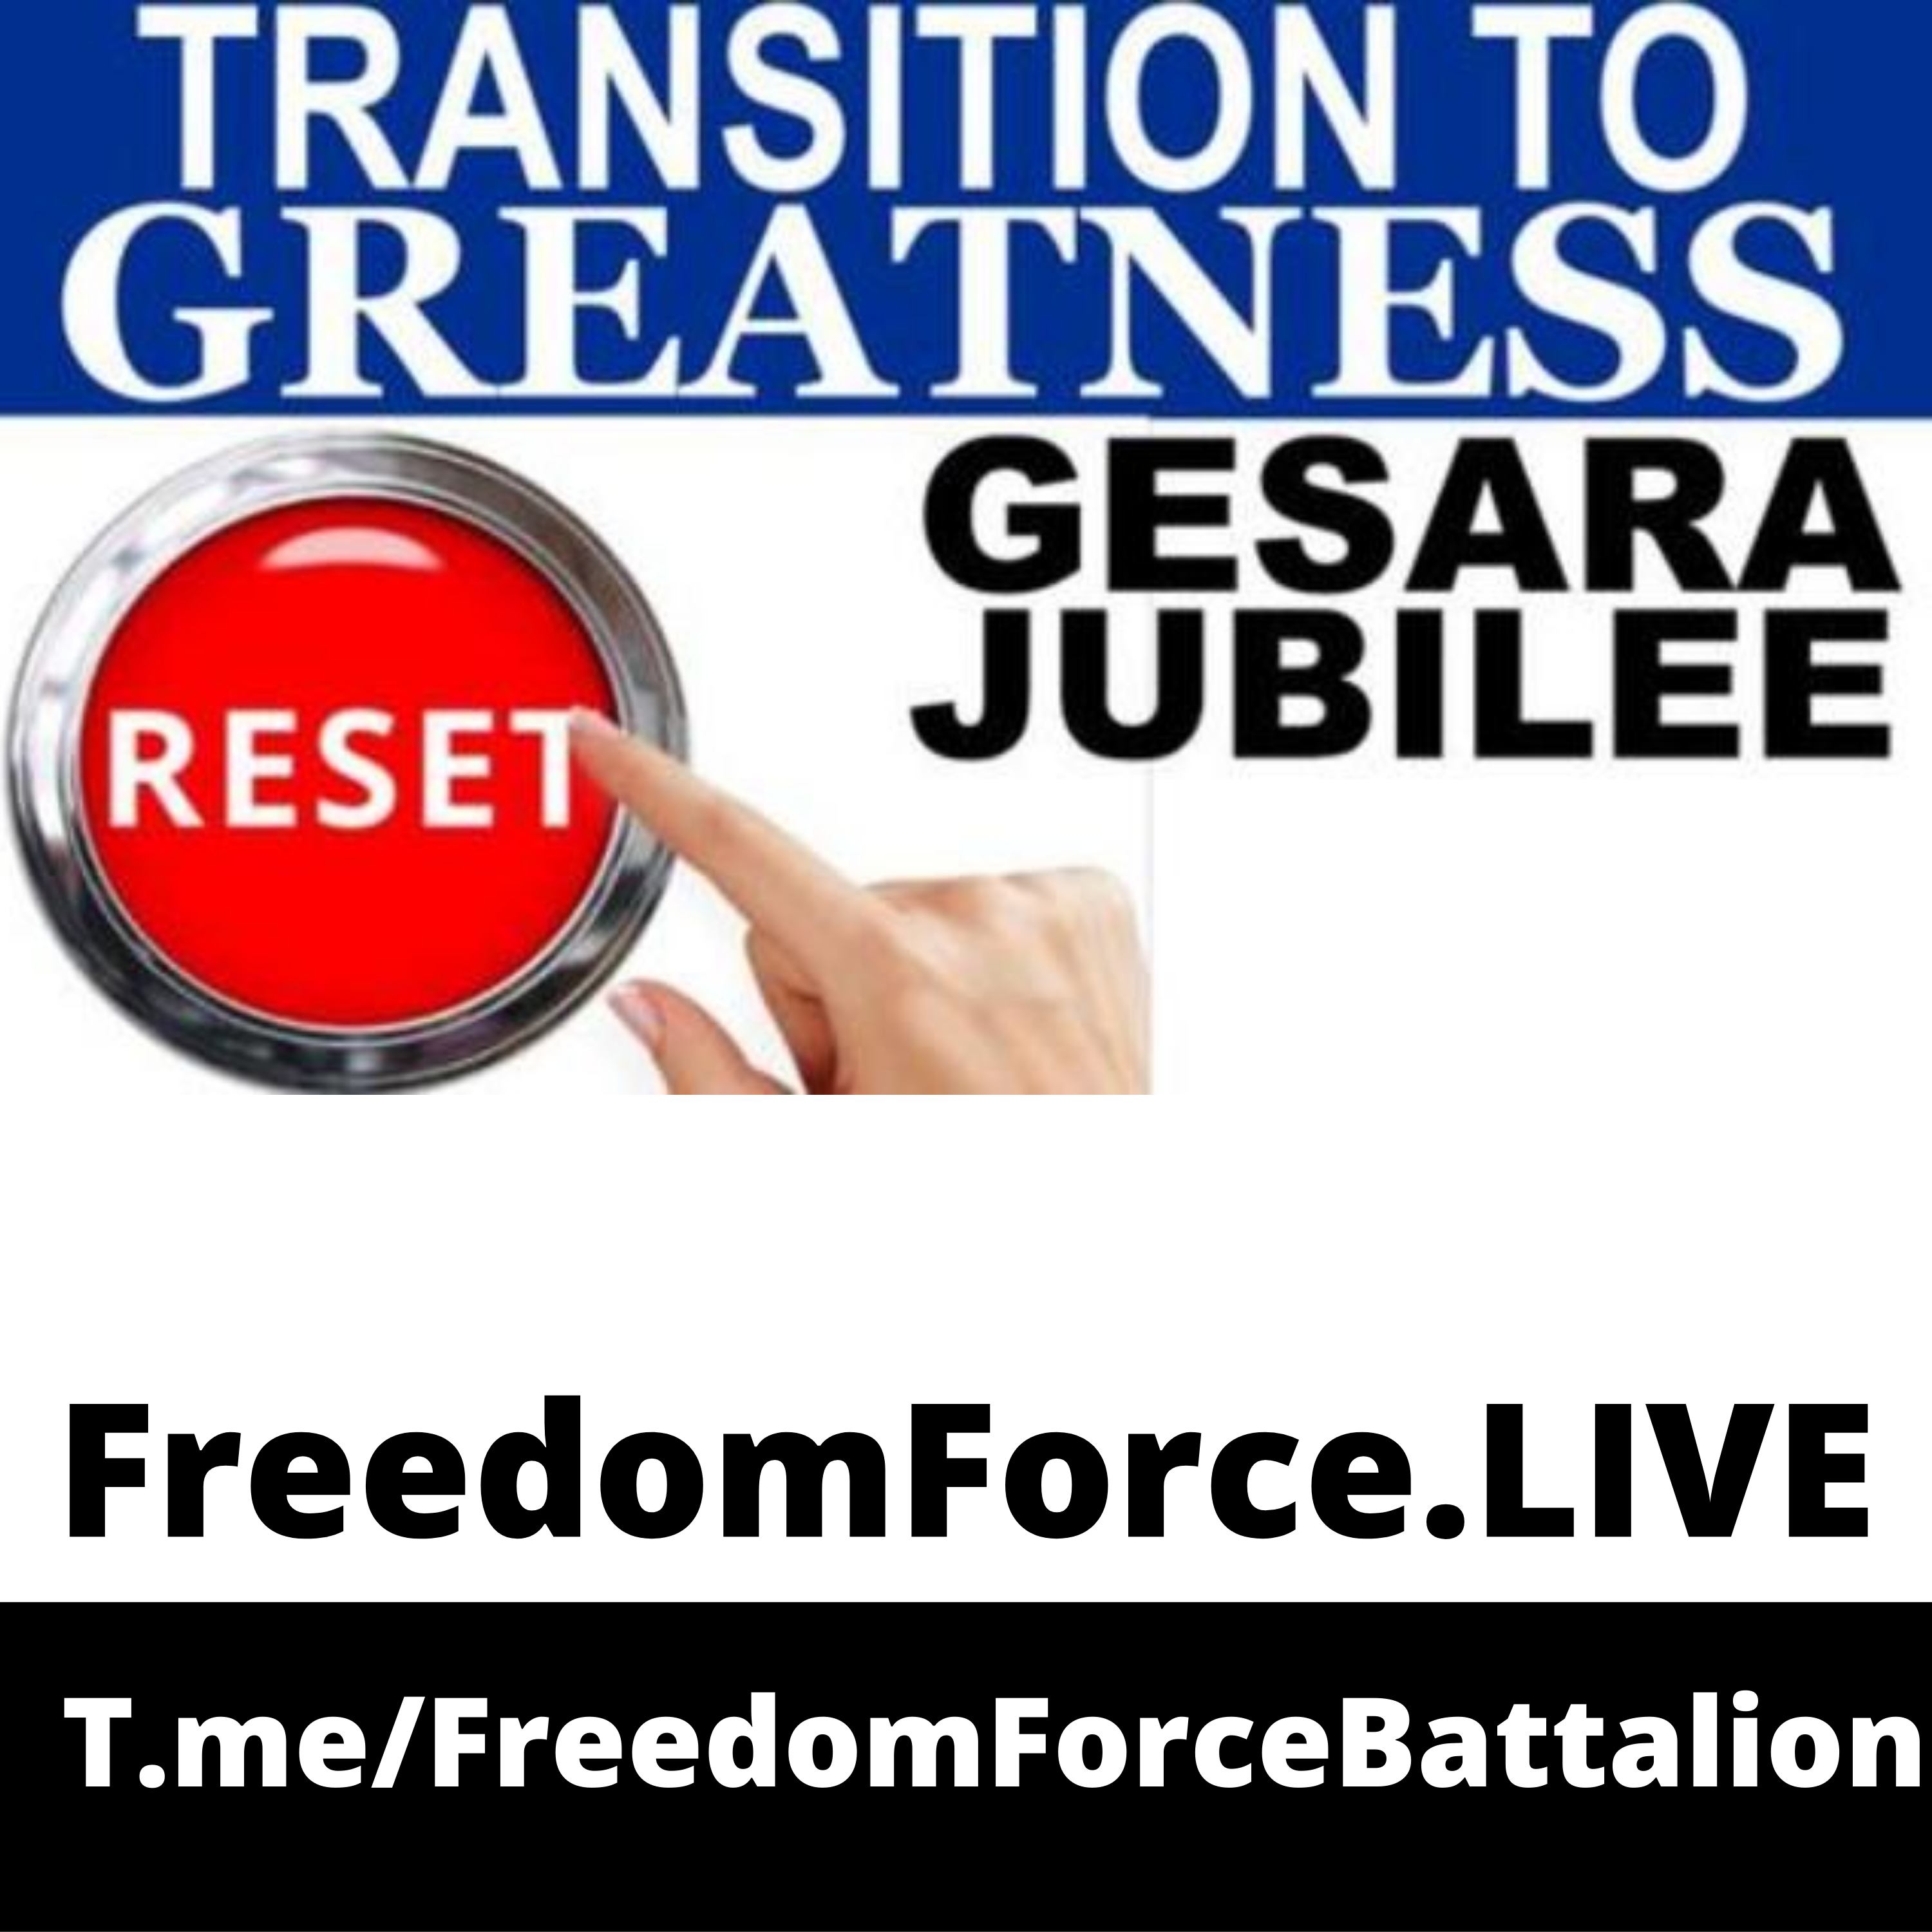 Reset Jubilee 5.23.20